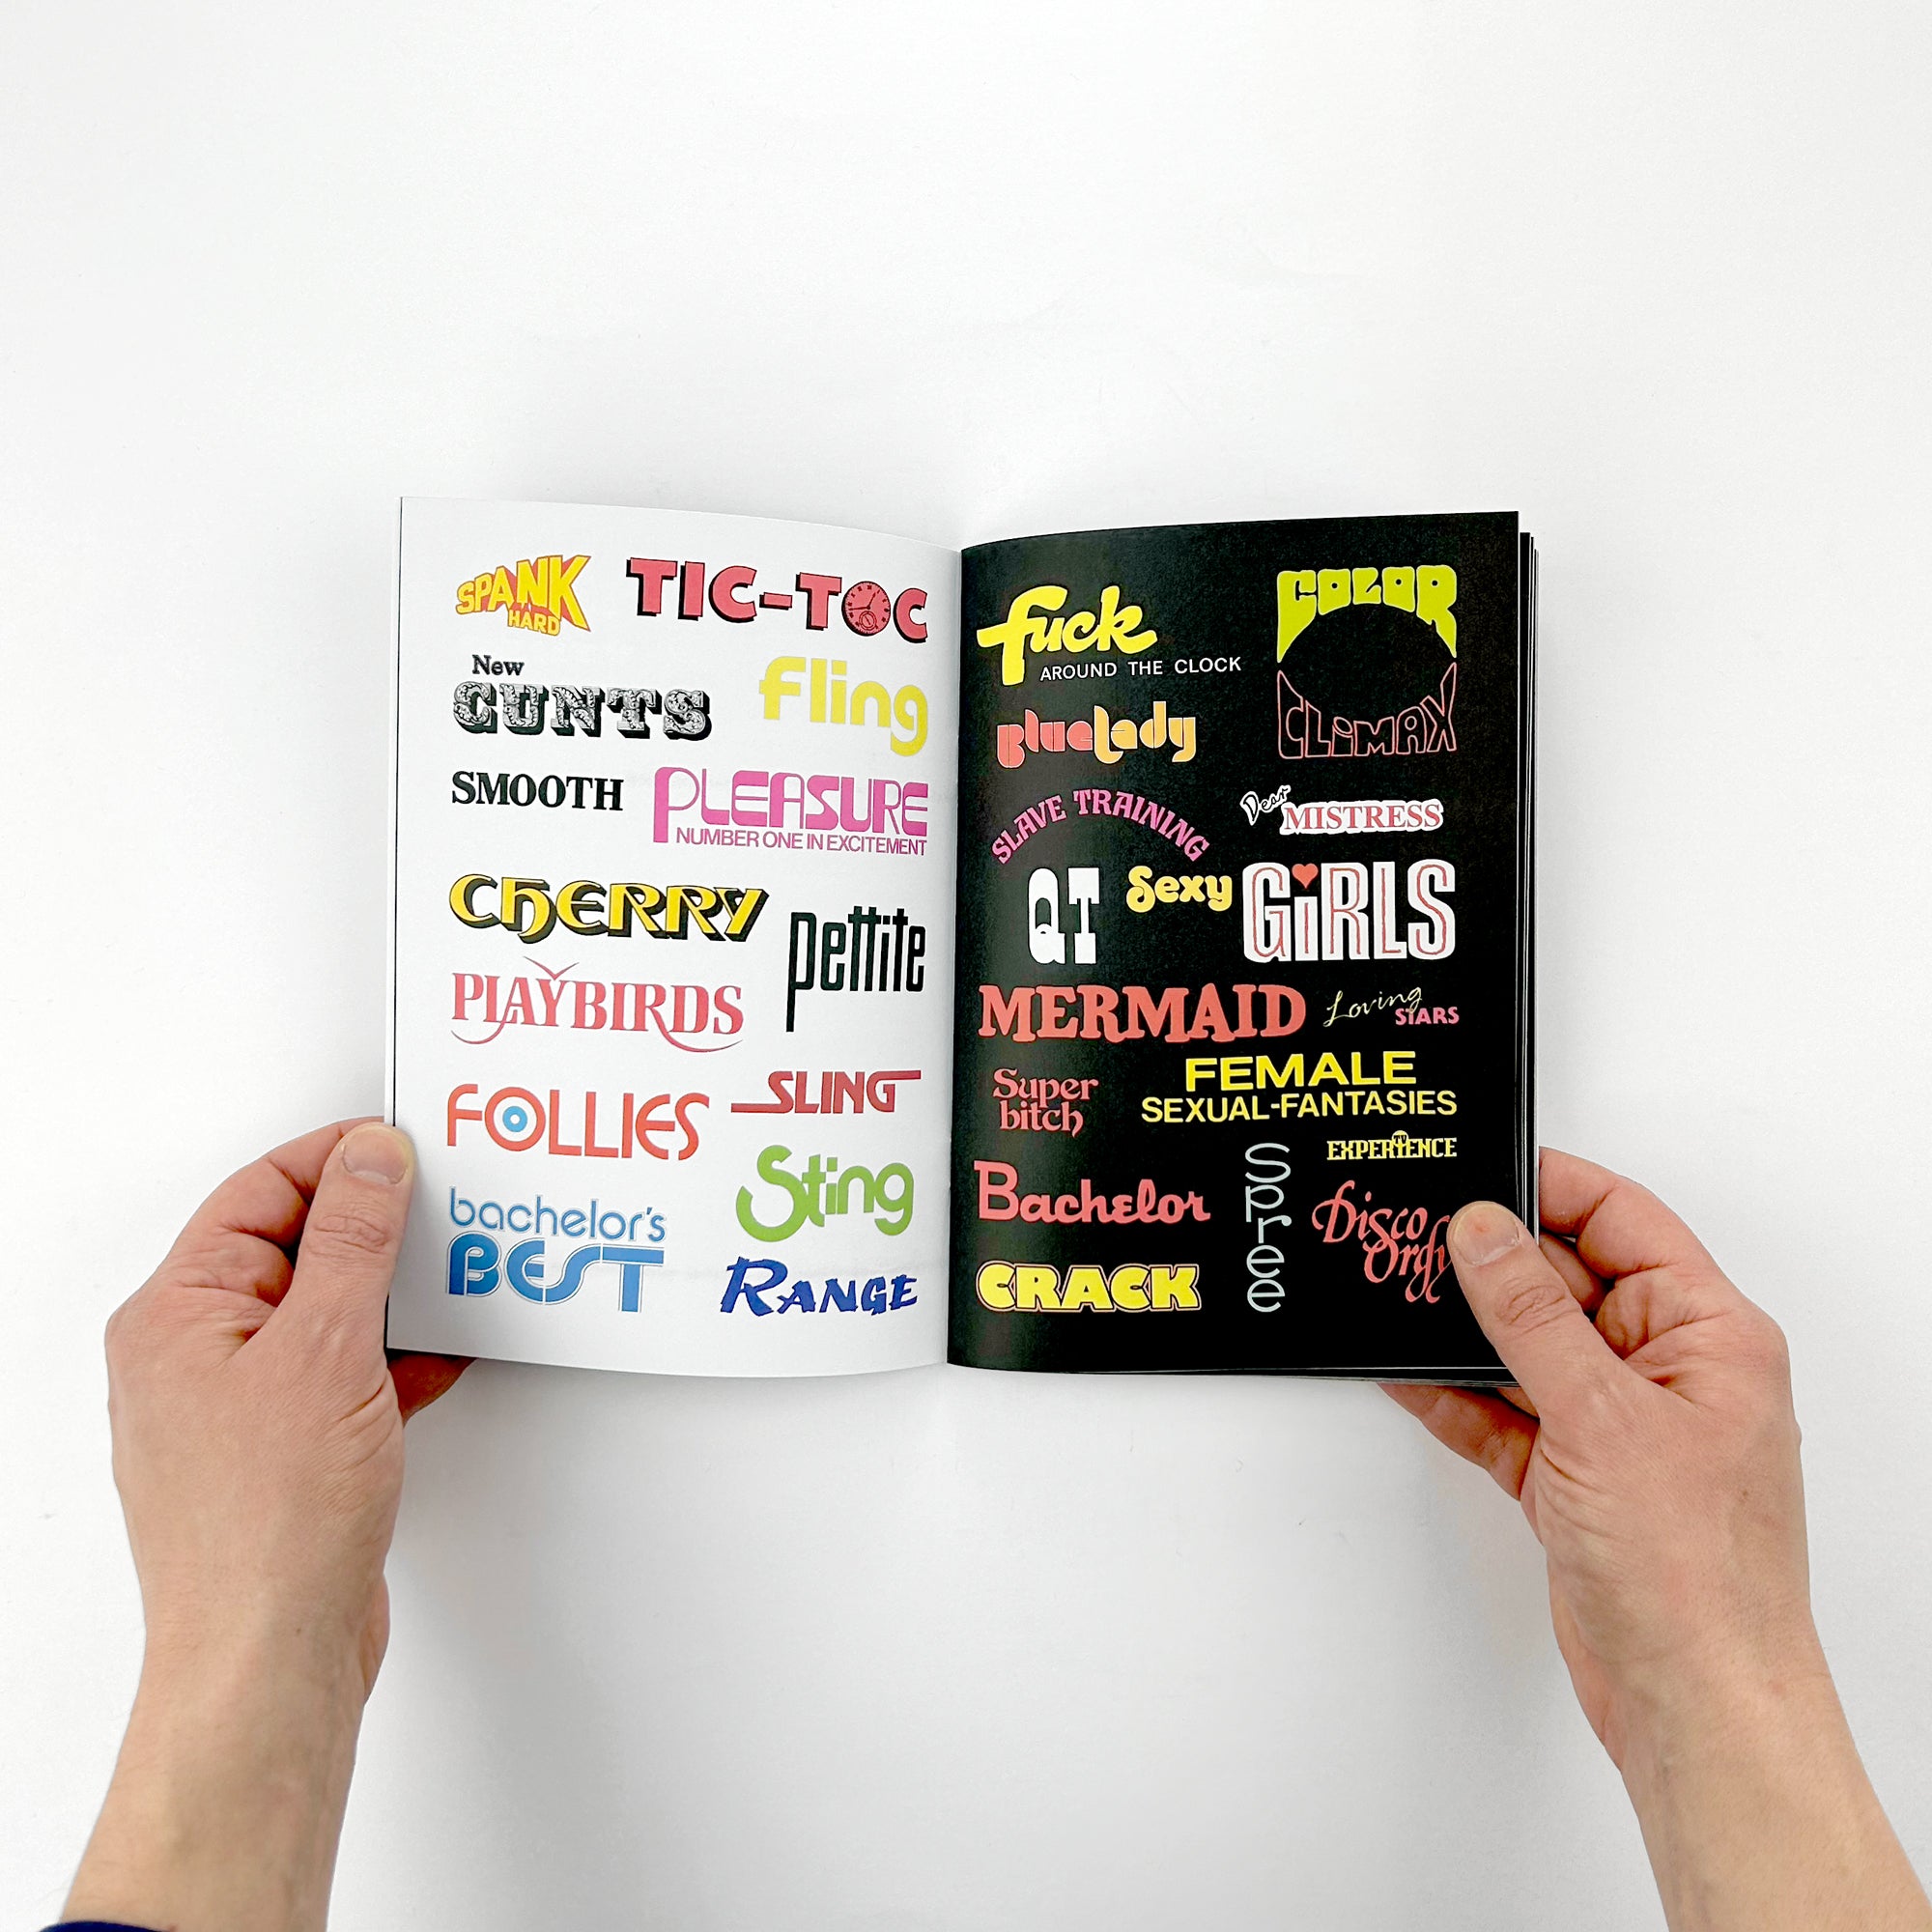 Top Shelf Type: Adult Magazine Logotypes 1960-1990